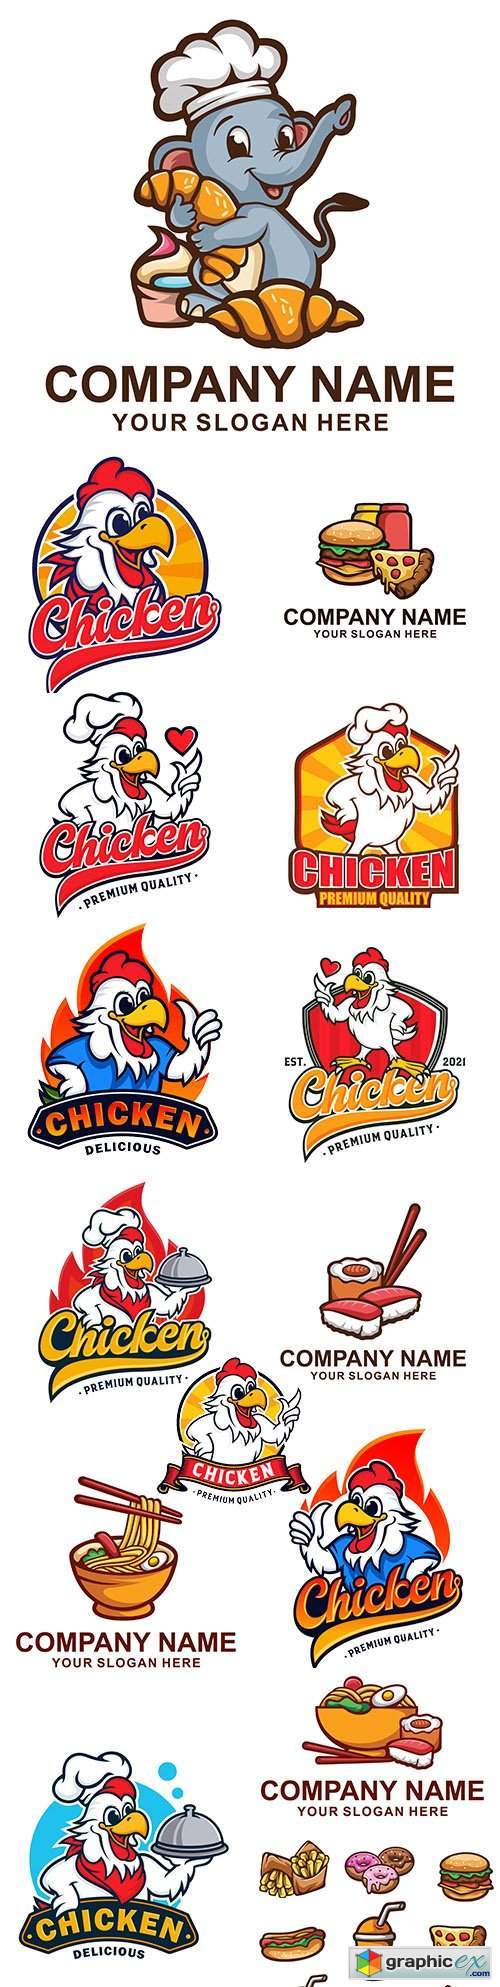 Mascot emblem and brand name logos design 10